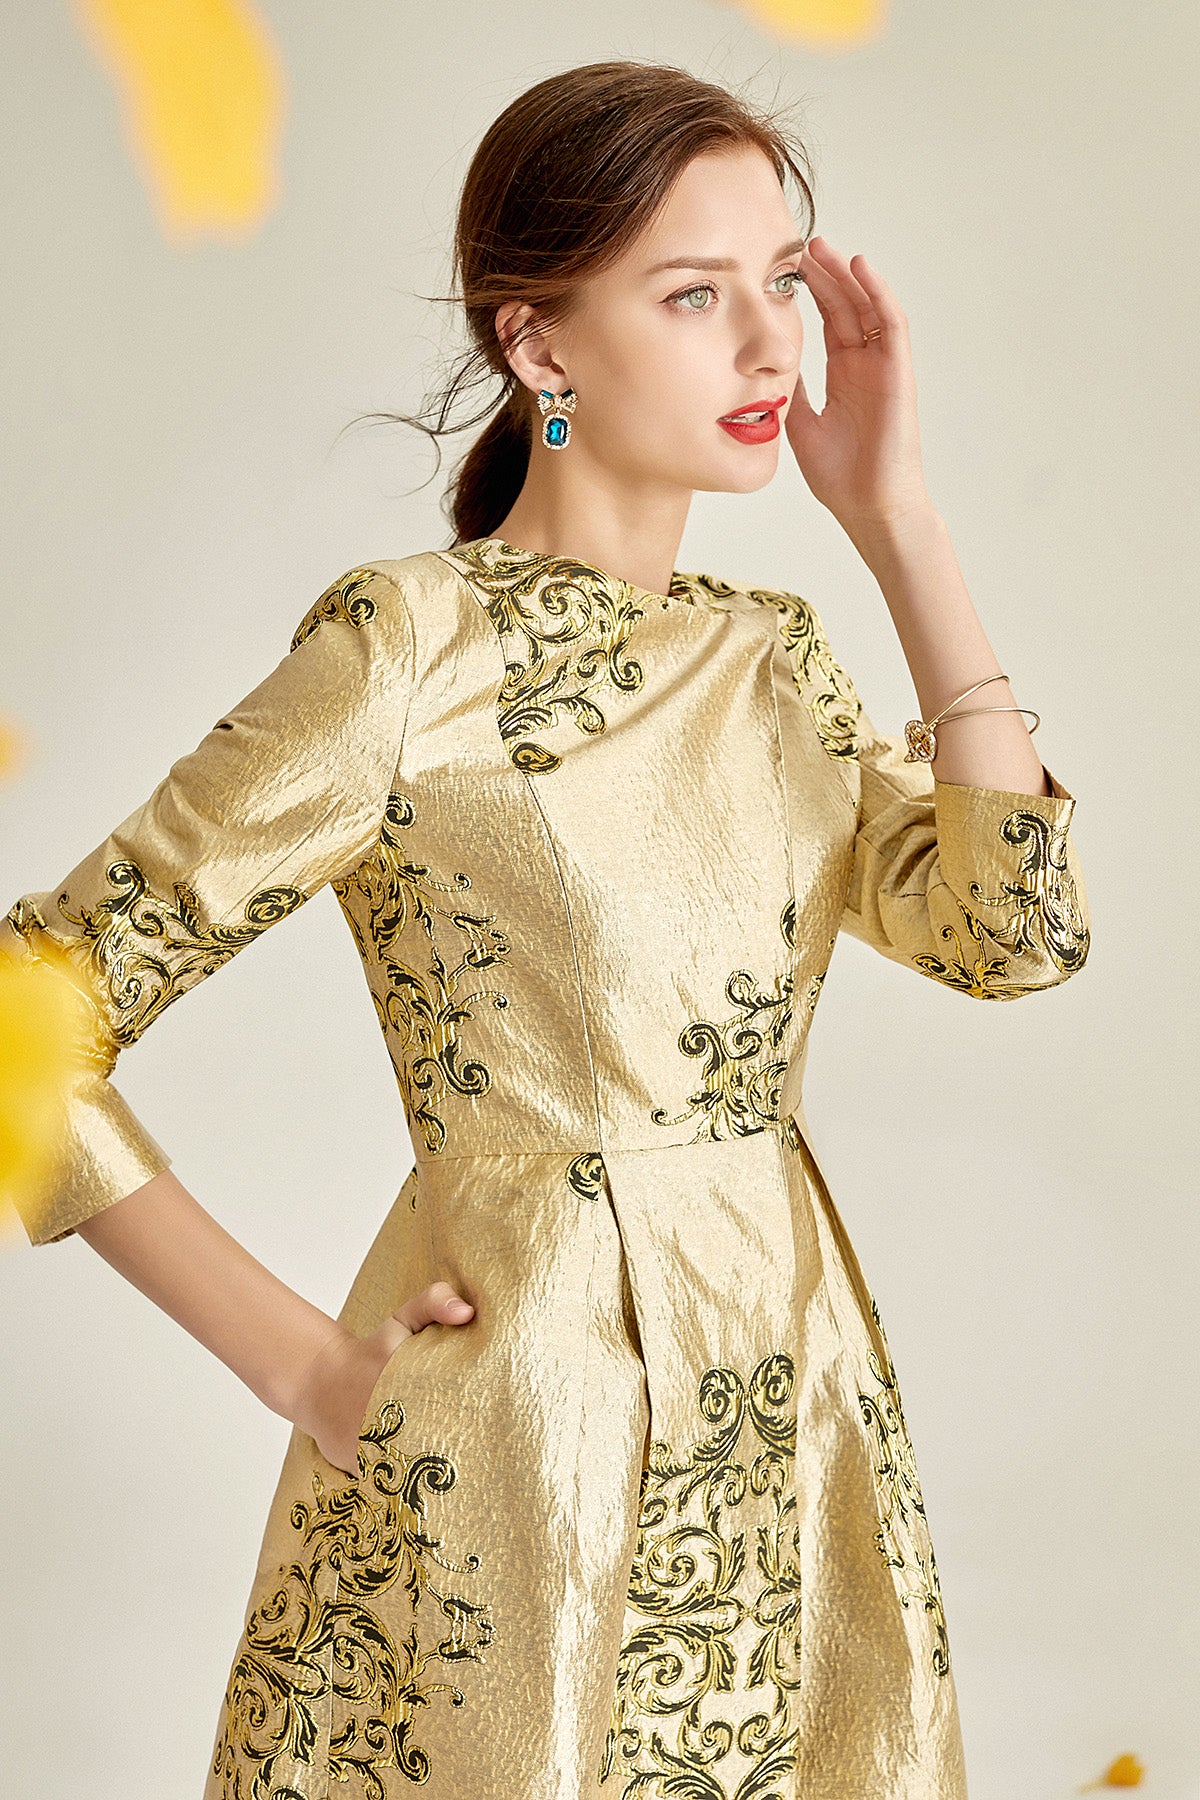 Autumn luxury retro jacquard dress jacket- Jiji